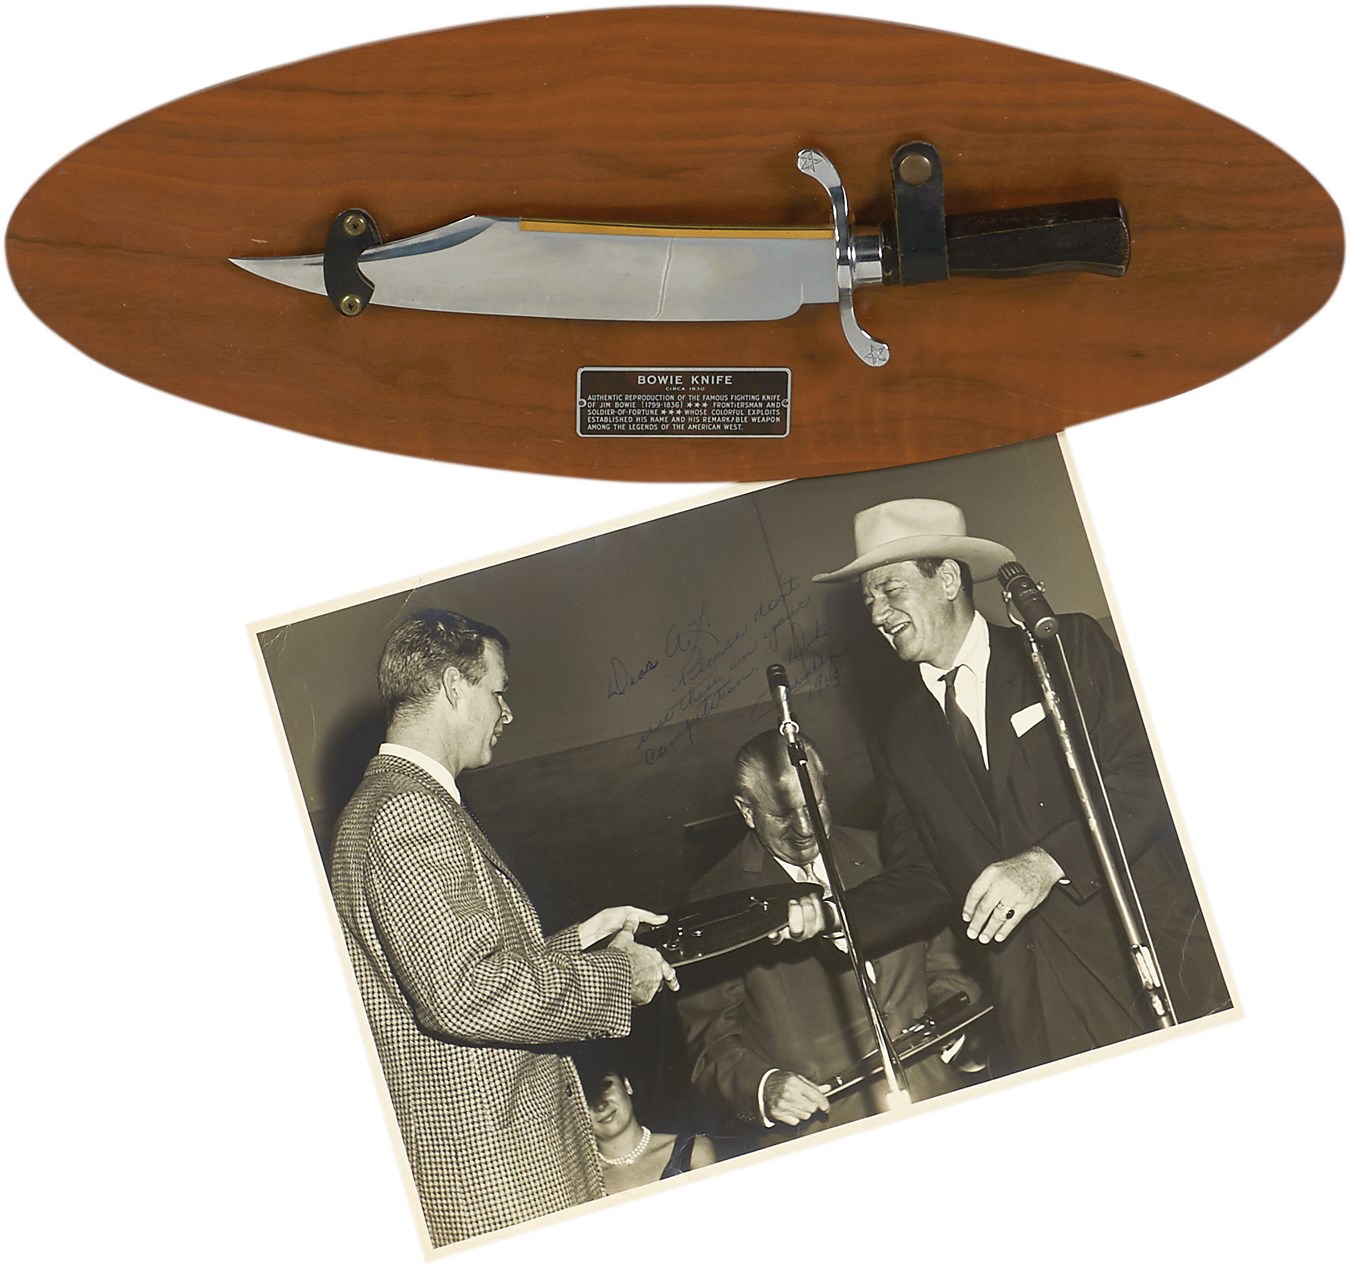 - 1960 "The Alamo" Bowie Knife Presented by John Wayne w/Signed Photo of Ceremony (Photo-Match)